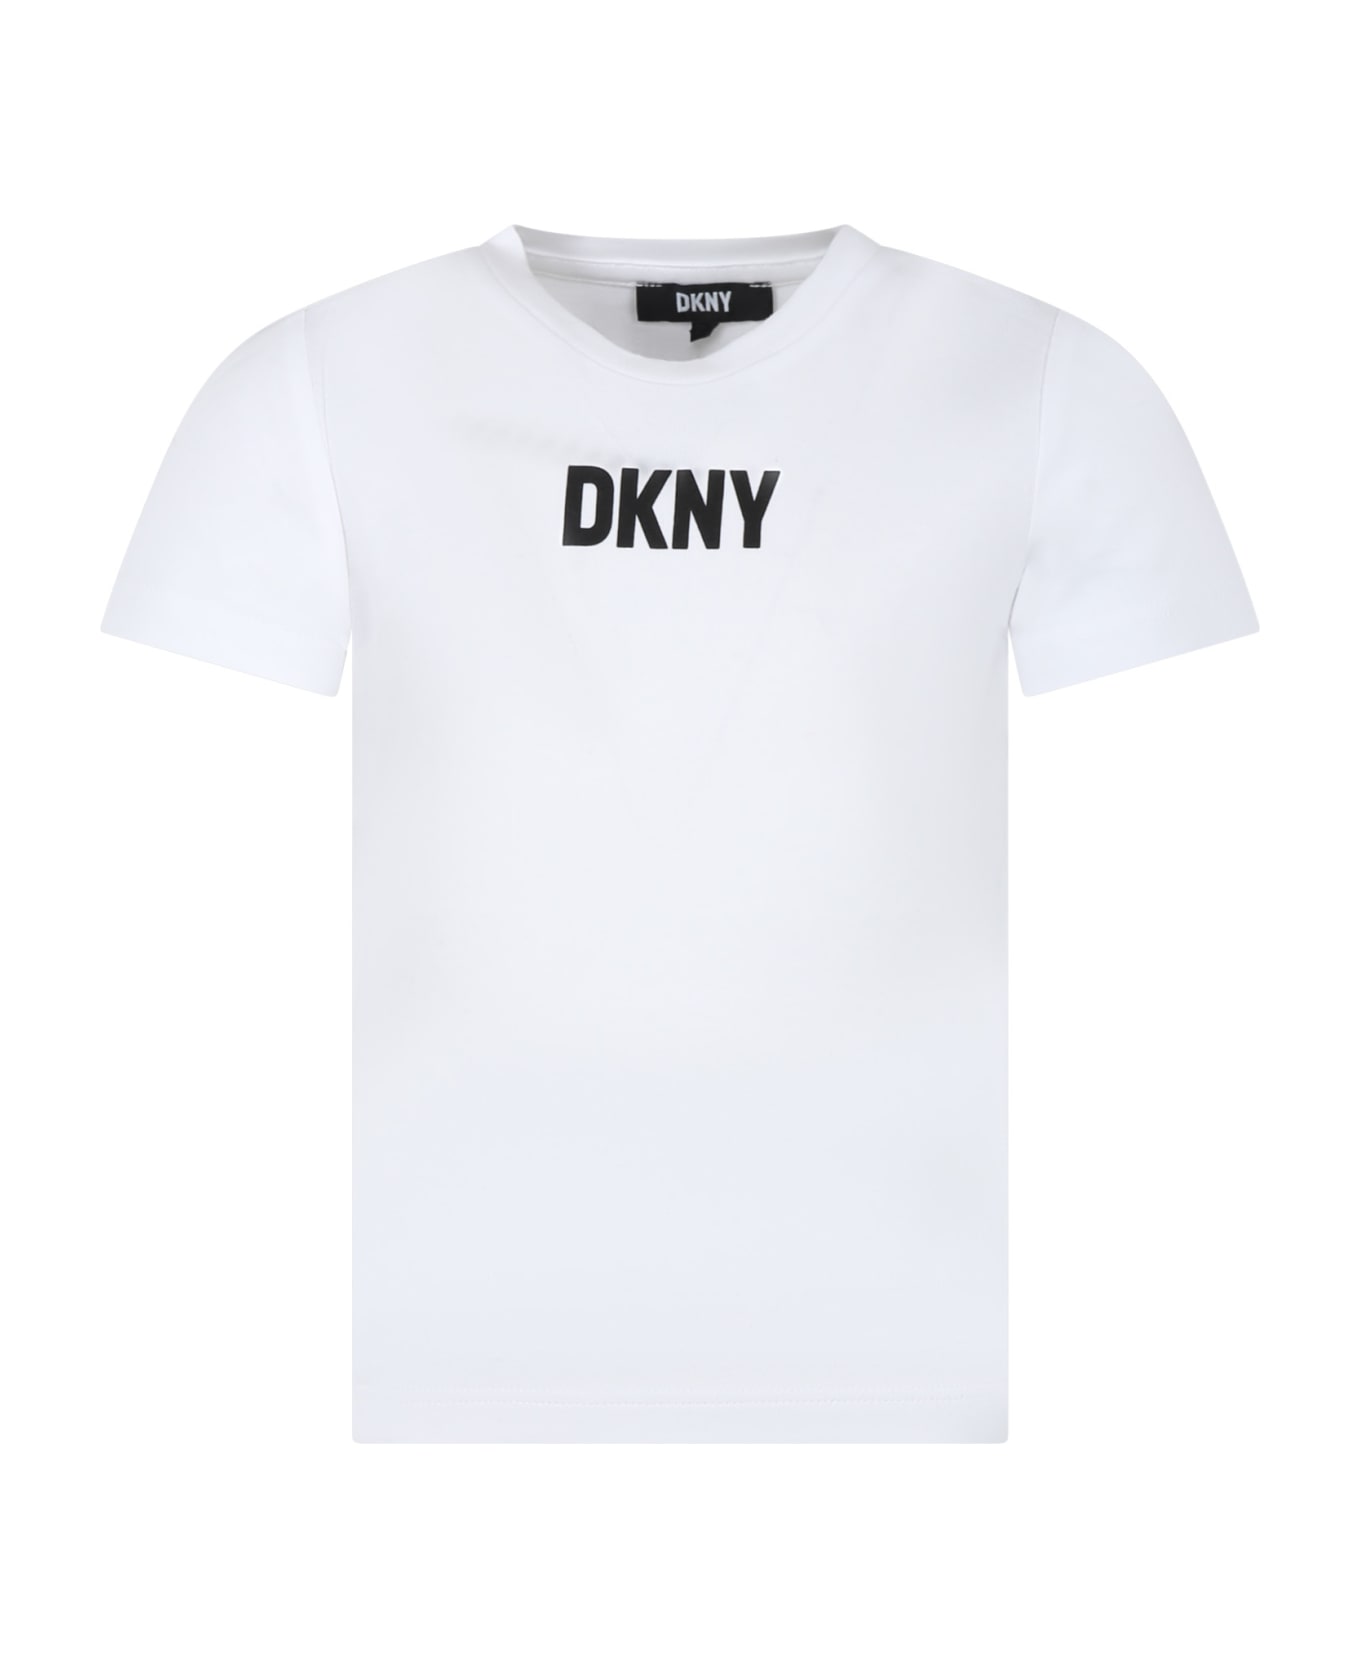 DKNY Black T-shirt For Kids With Logo - White